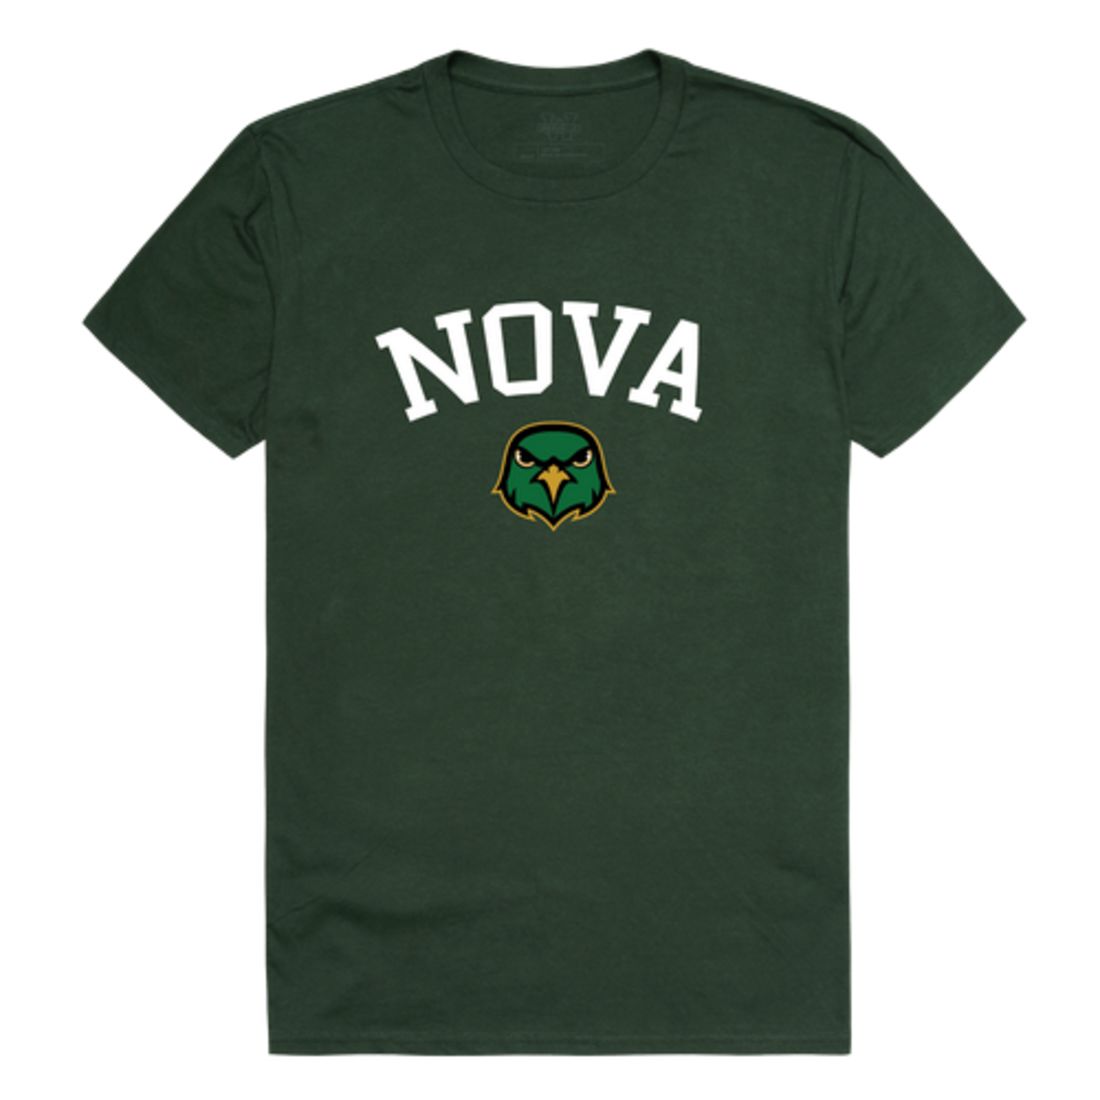 Northern Virginia Community College Nighthawks Arch T-Shirt Tee